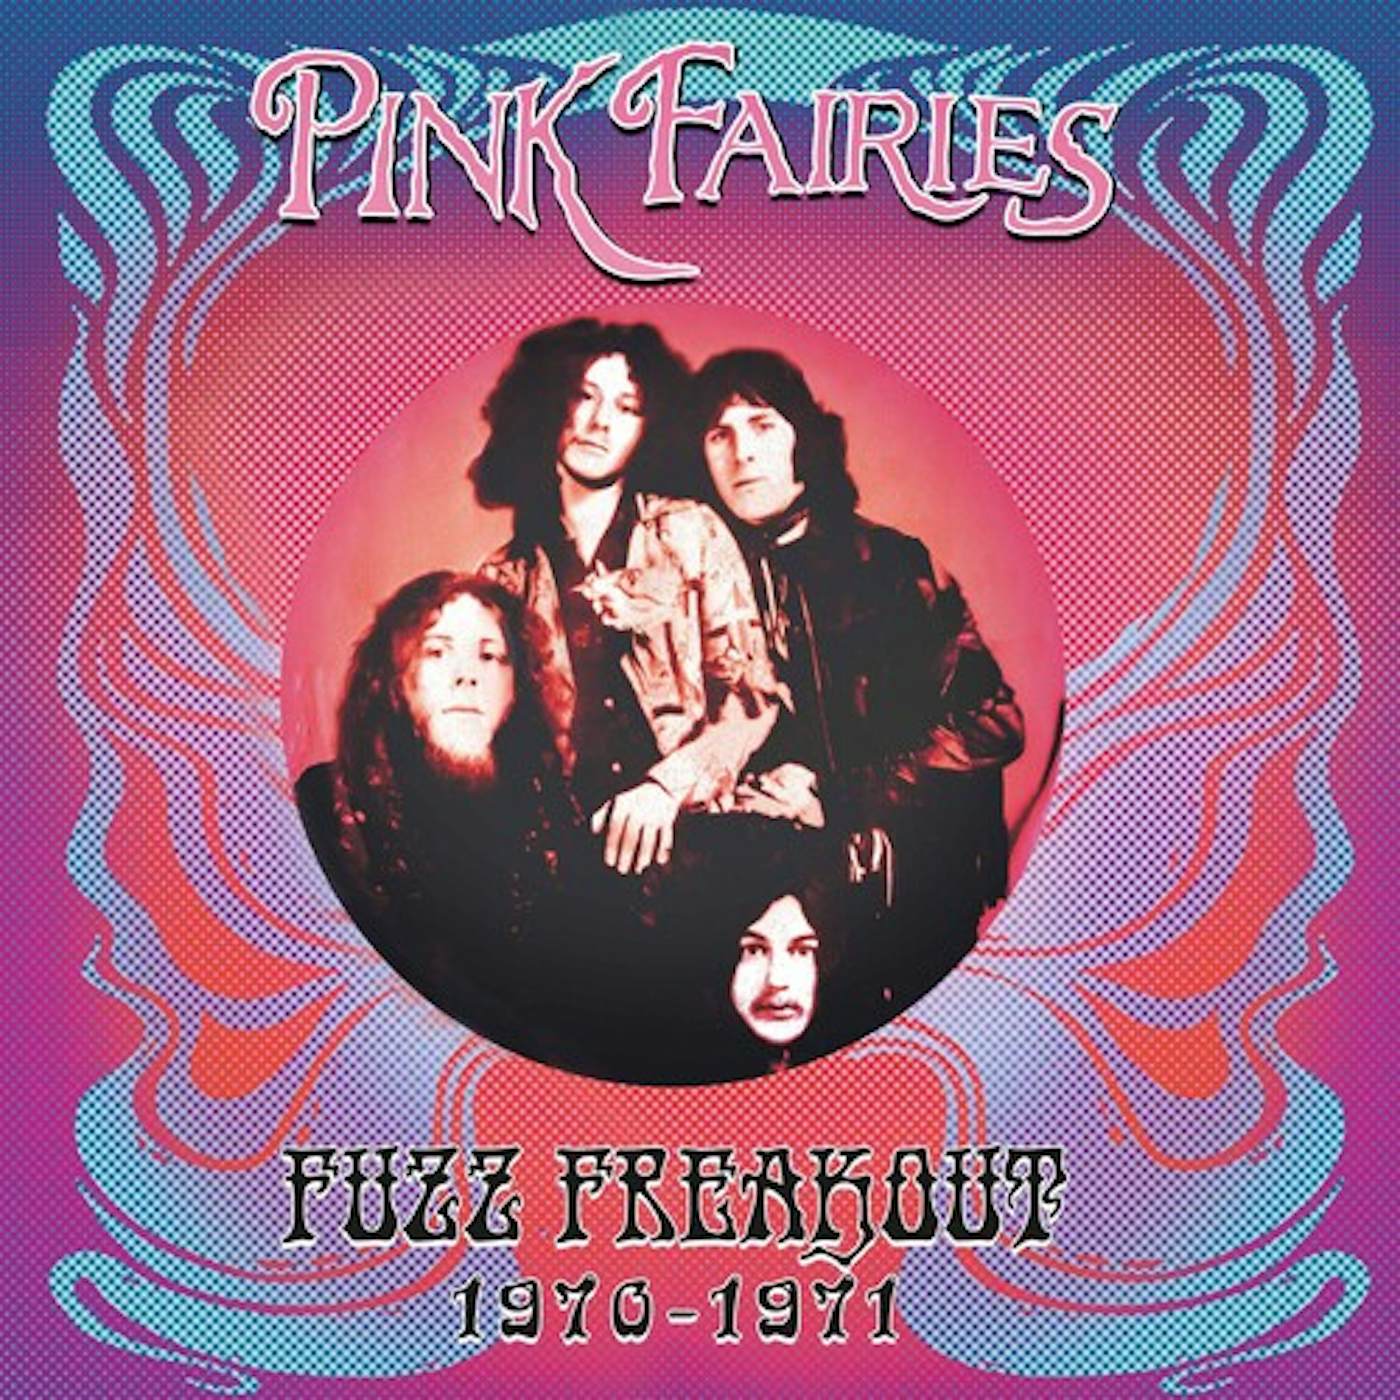 The Pink Fairies FUZZ FREAKOUT 1970-1971 - BLUE/PINK/BLACK SPLATTER Vinyl Record